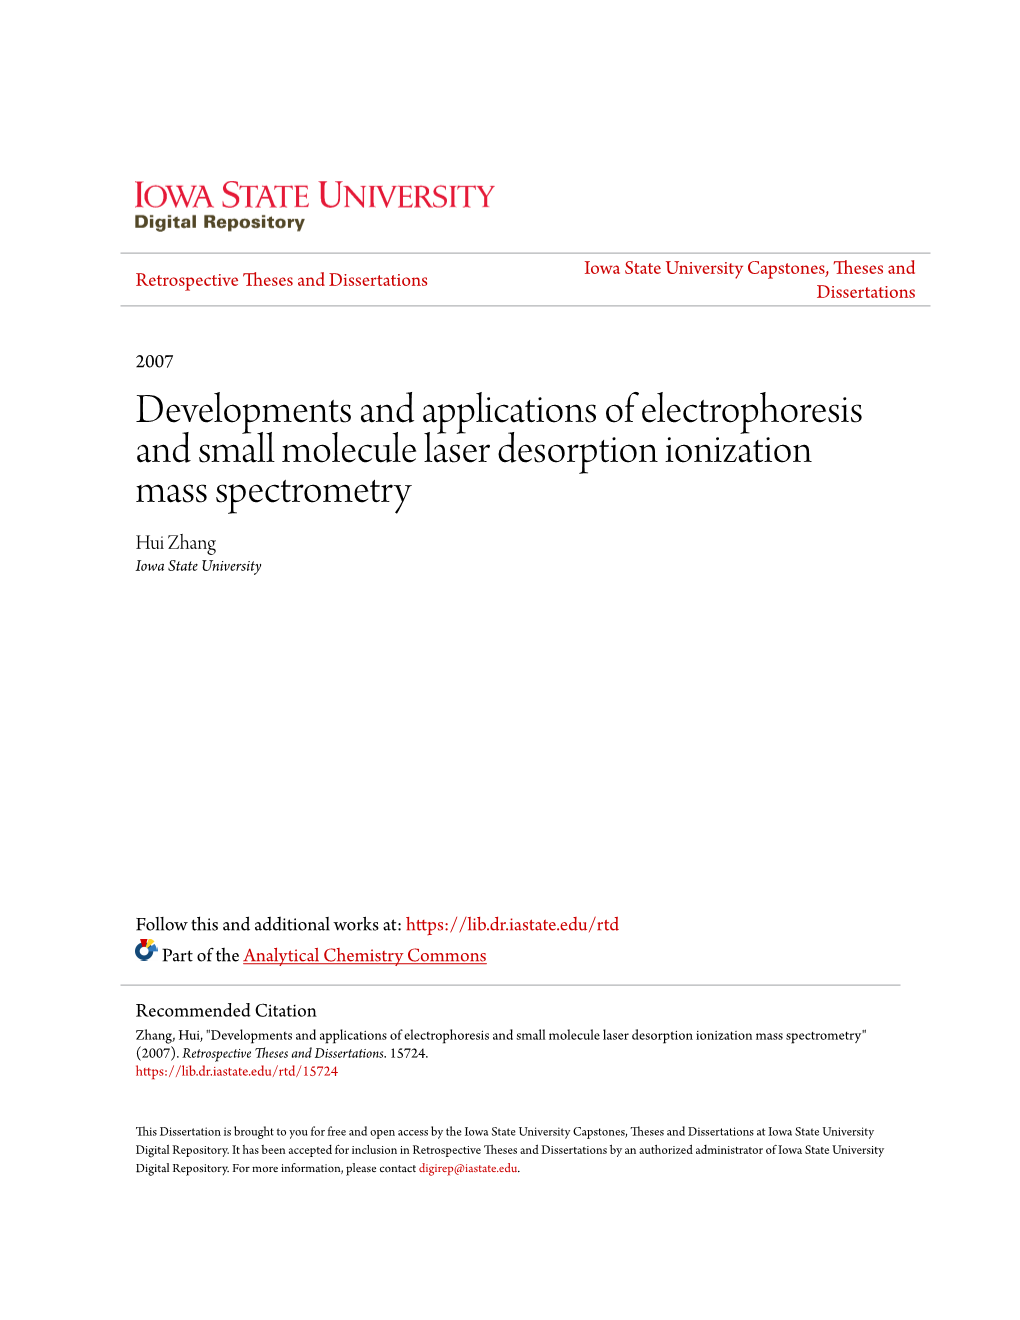 Developments and Applications of Electrophoresis and Small Molecule Laser Desorption Ionization Mass Spectrometry Hui Zhang Iowa State University